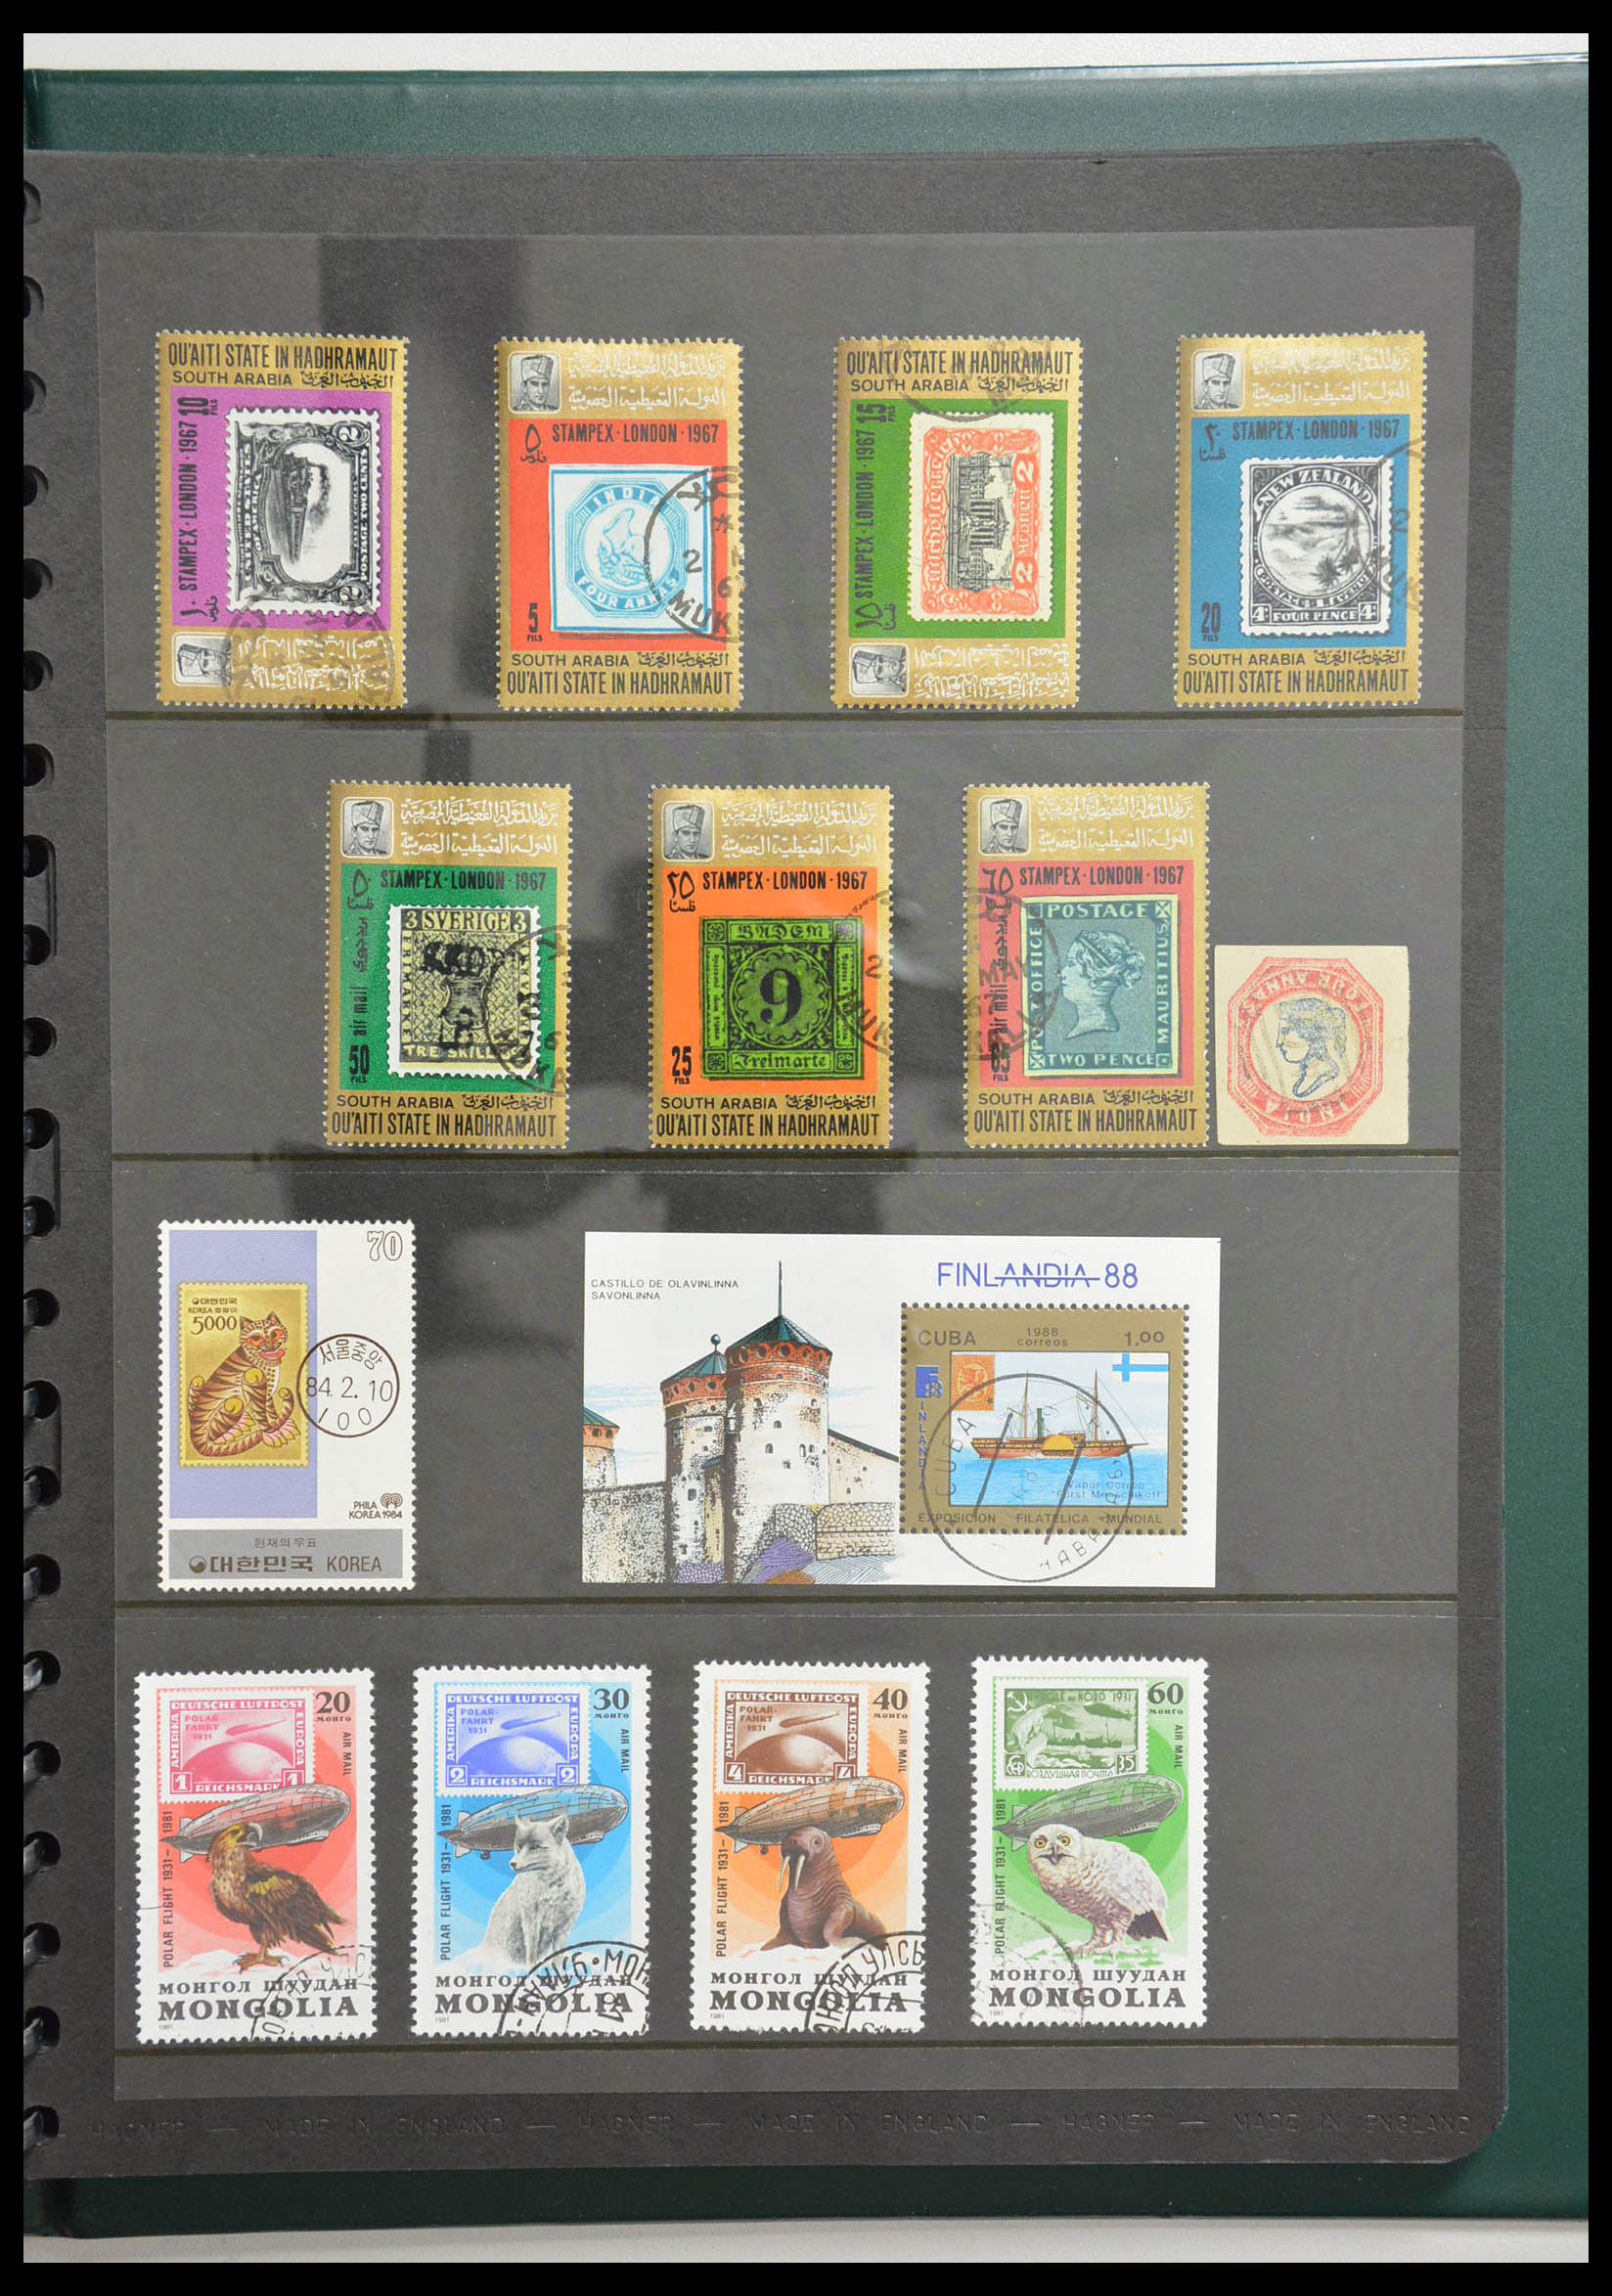 28337 076 - 28337 Postzegel op postzegel 1840-2001.